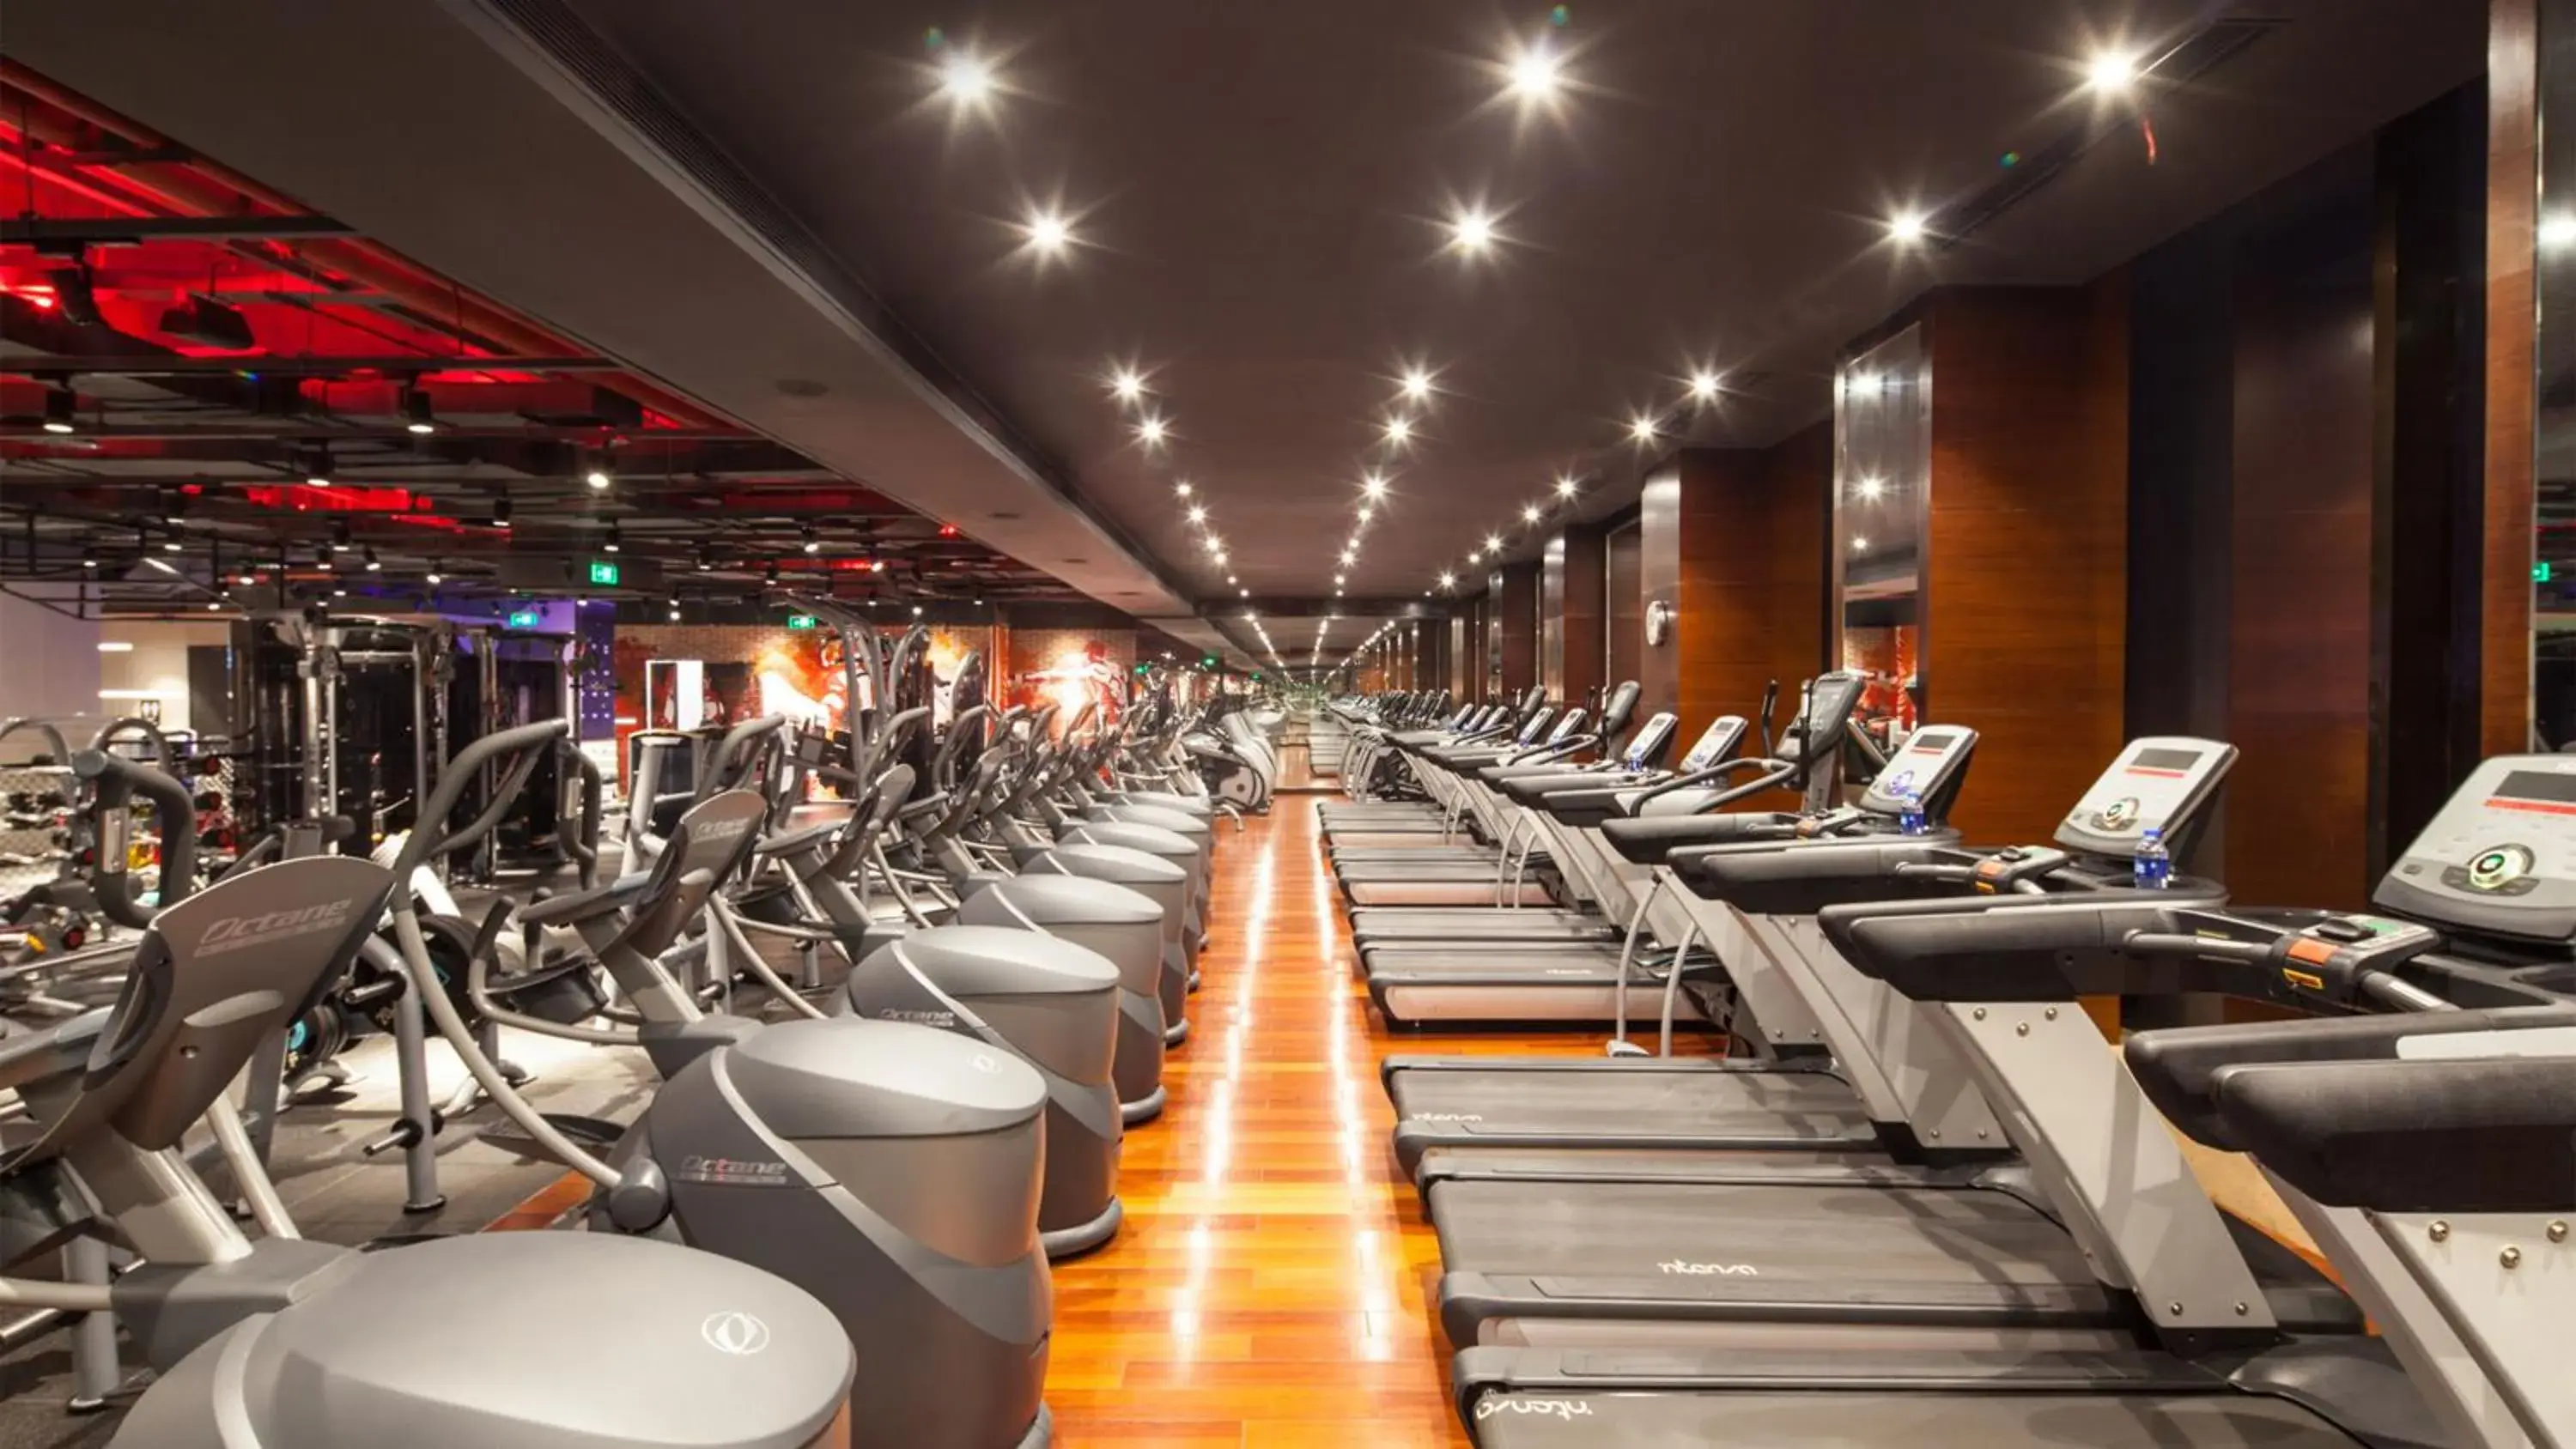 Fitness centre/facilities in Crowne Plaza Shanghai Jinxiu